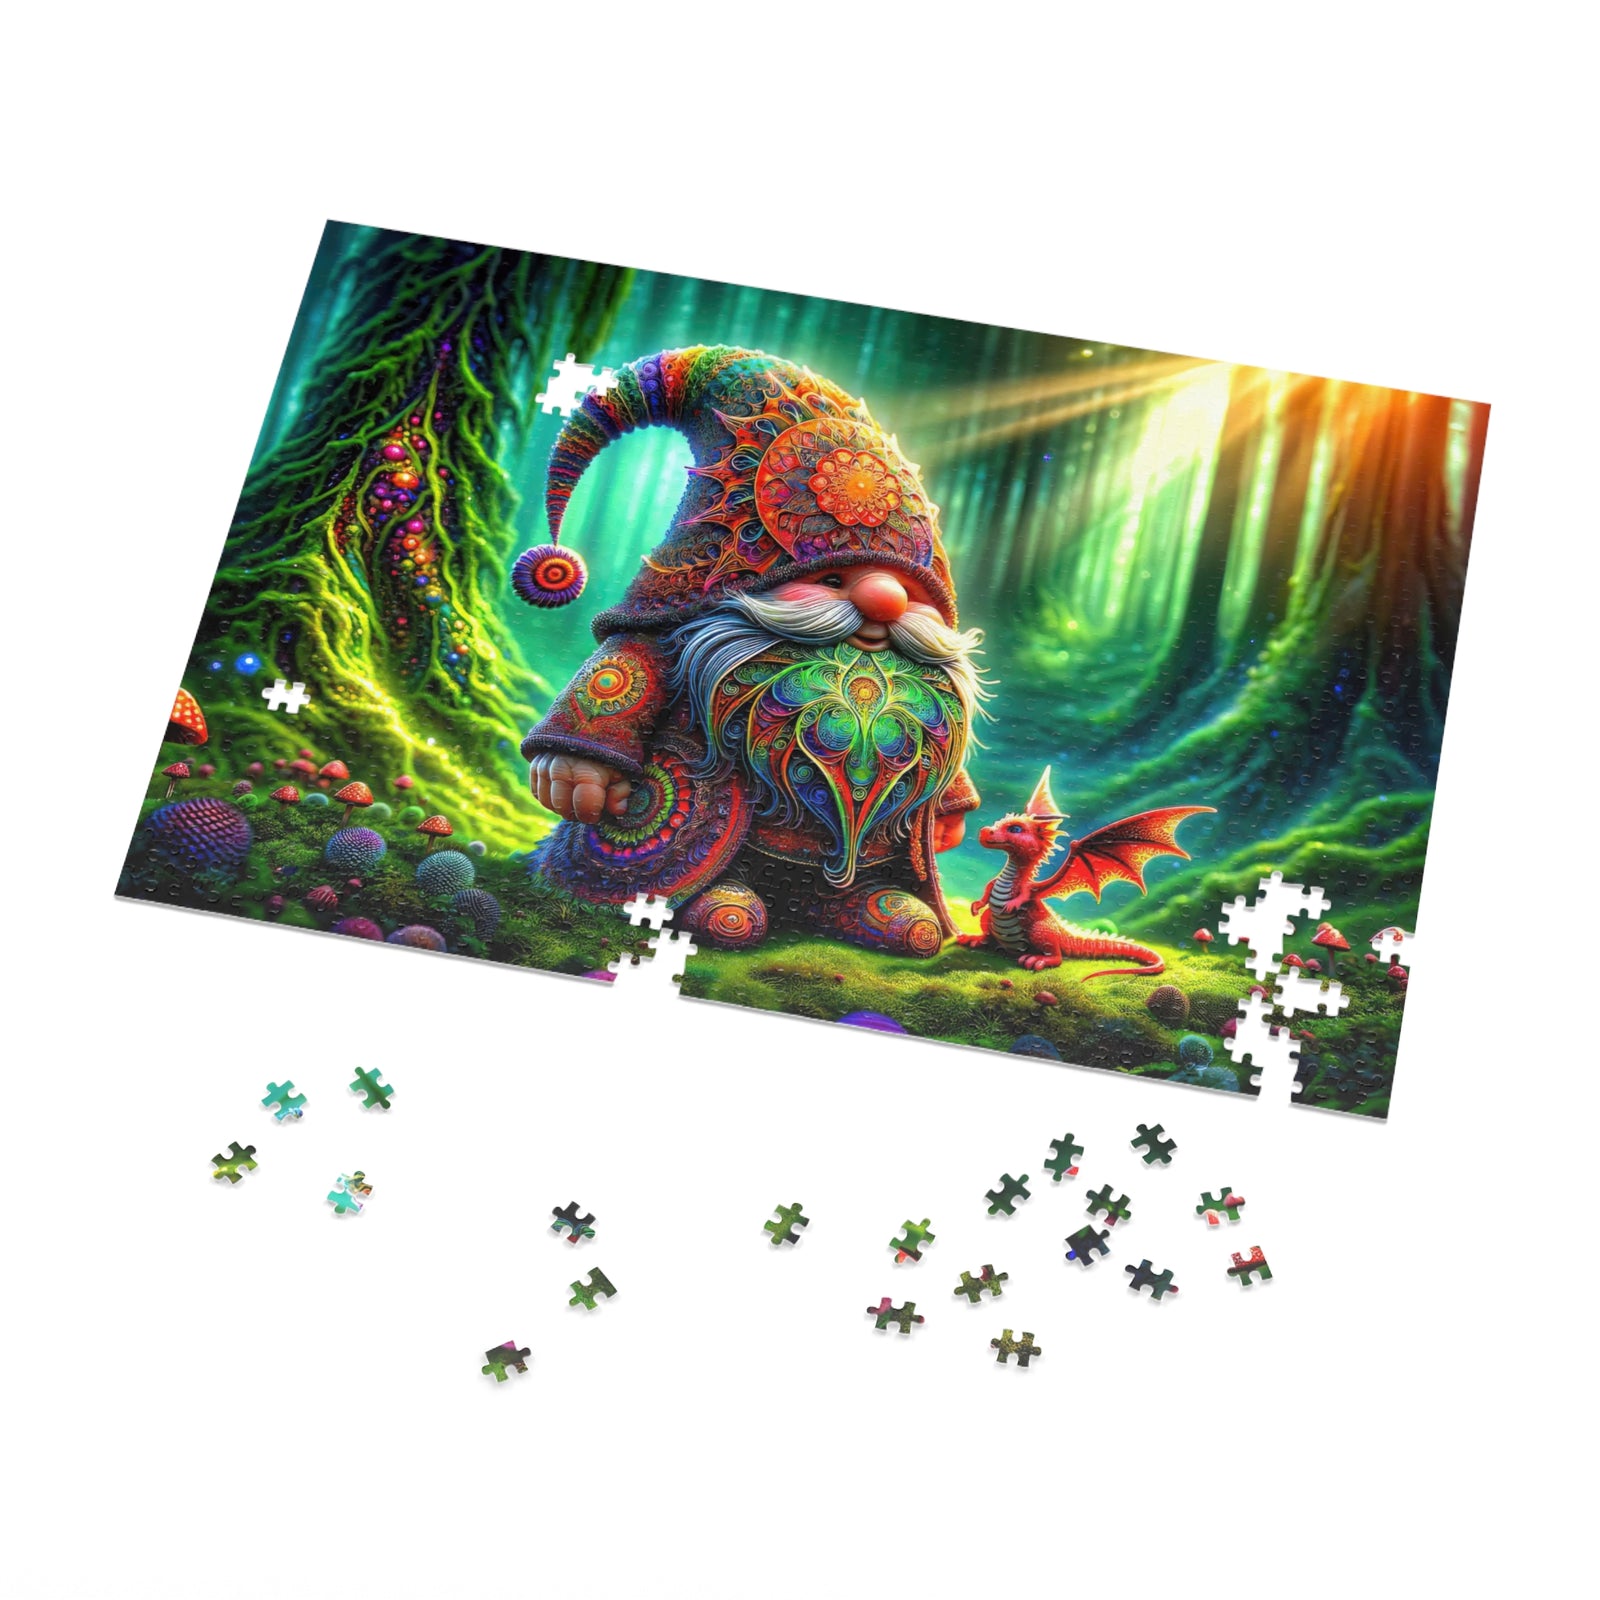 The Enchanter's Companion Jigsaw Puzzle